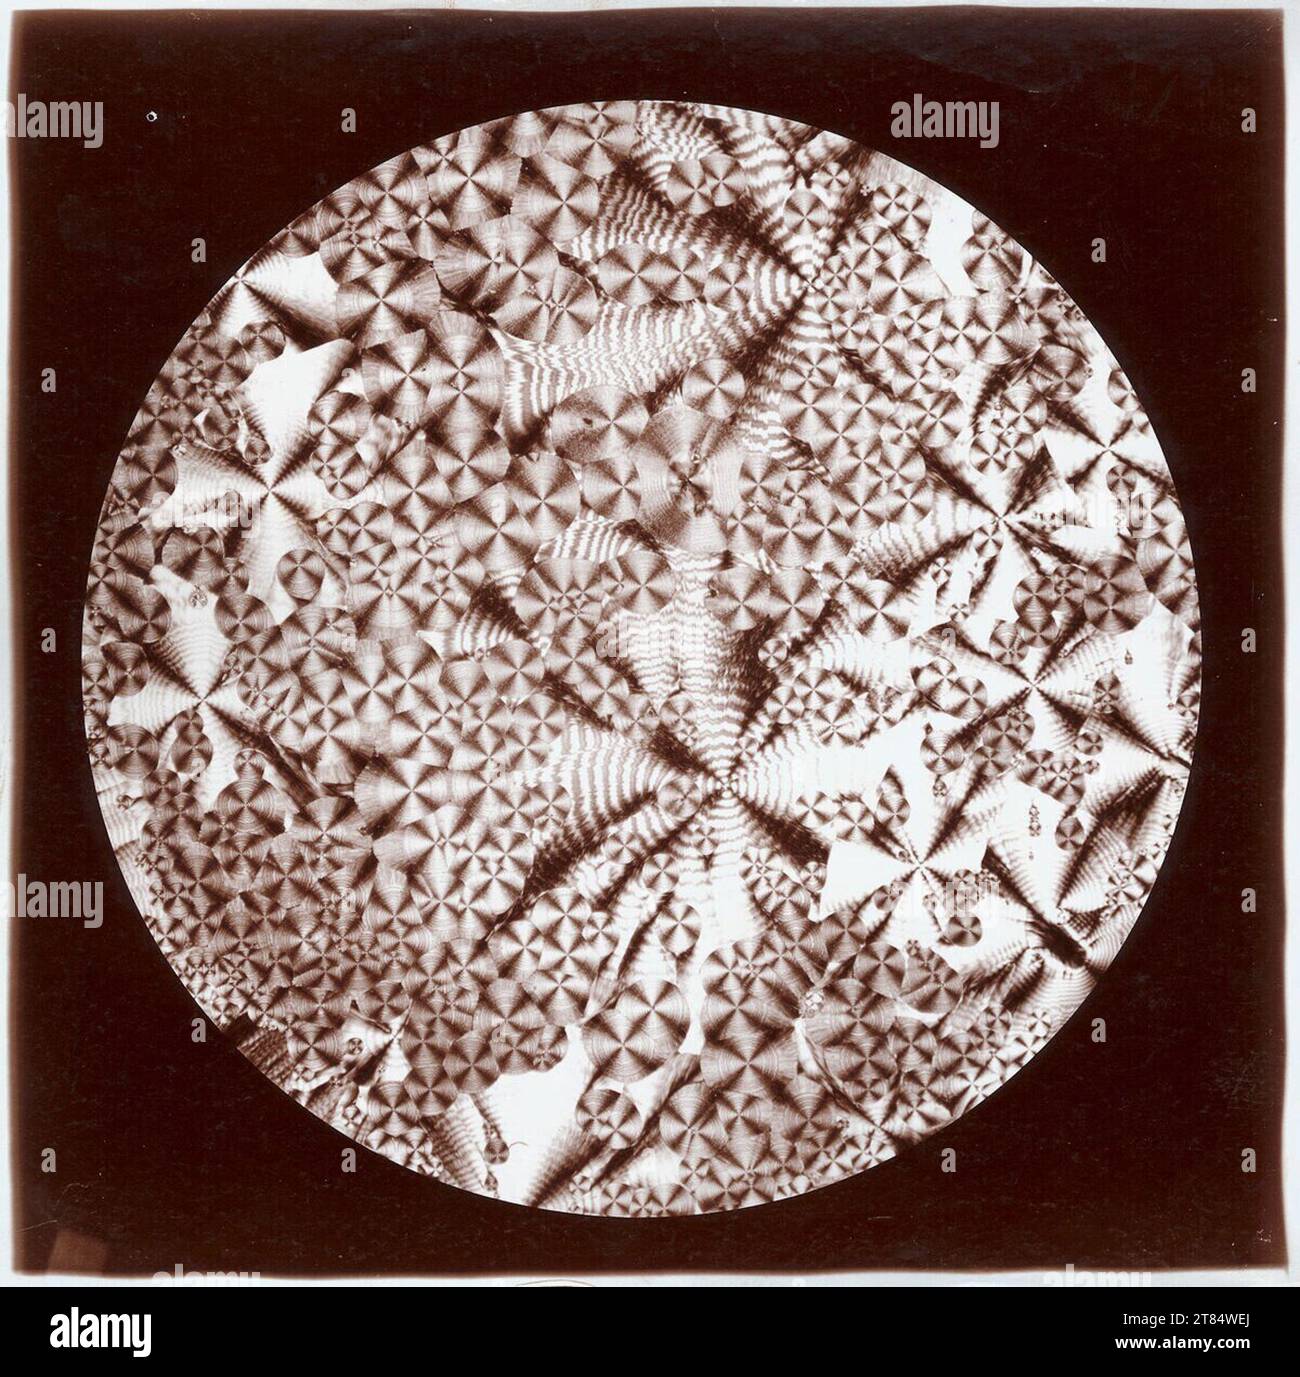 Hans Hauswaldt Asparagin after light. Silver gelatin development paper 1900 or earlier Stock Photo